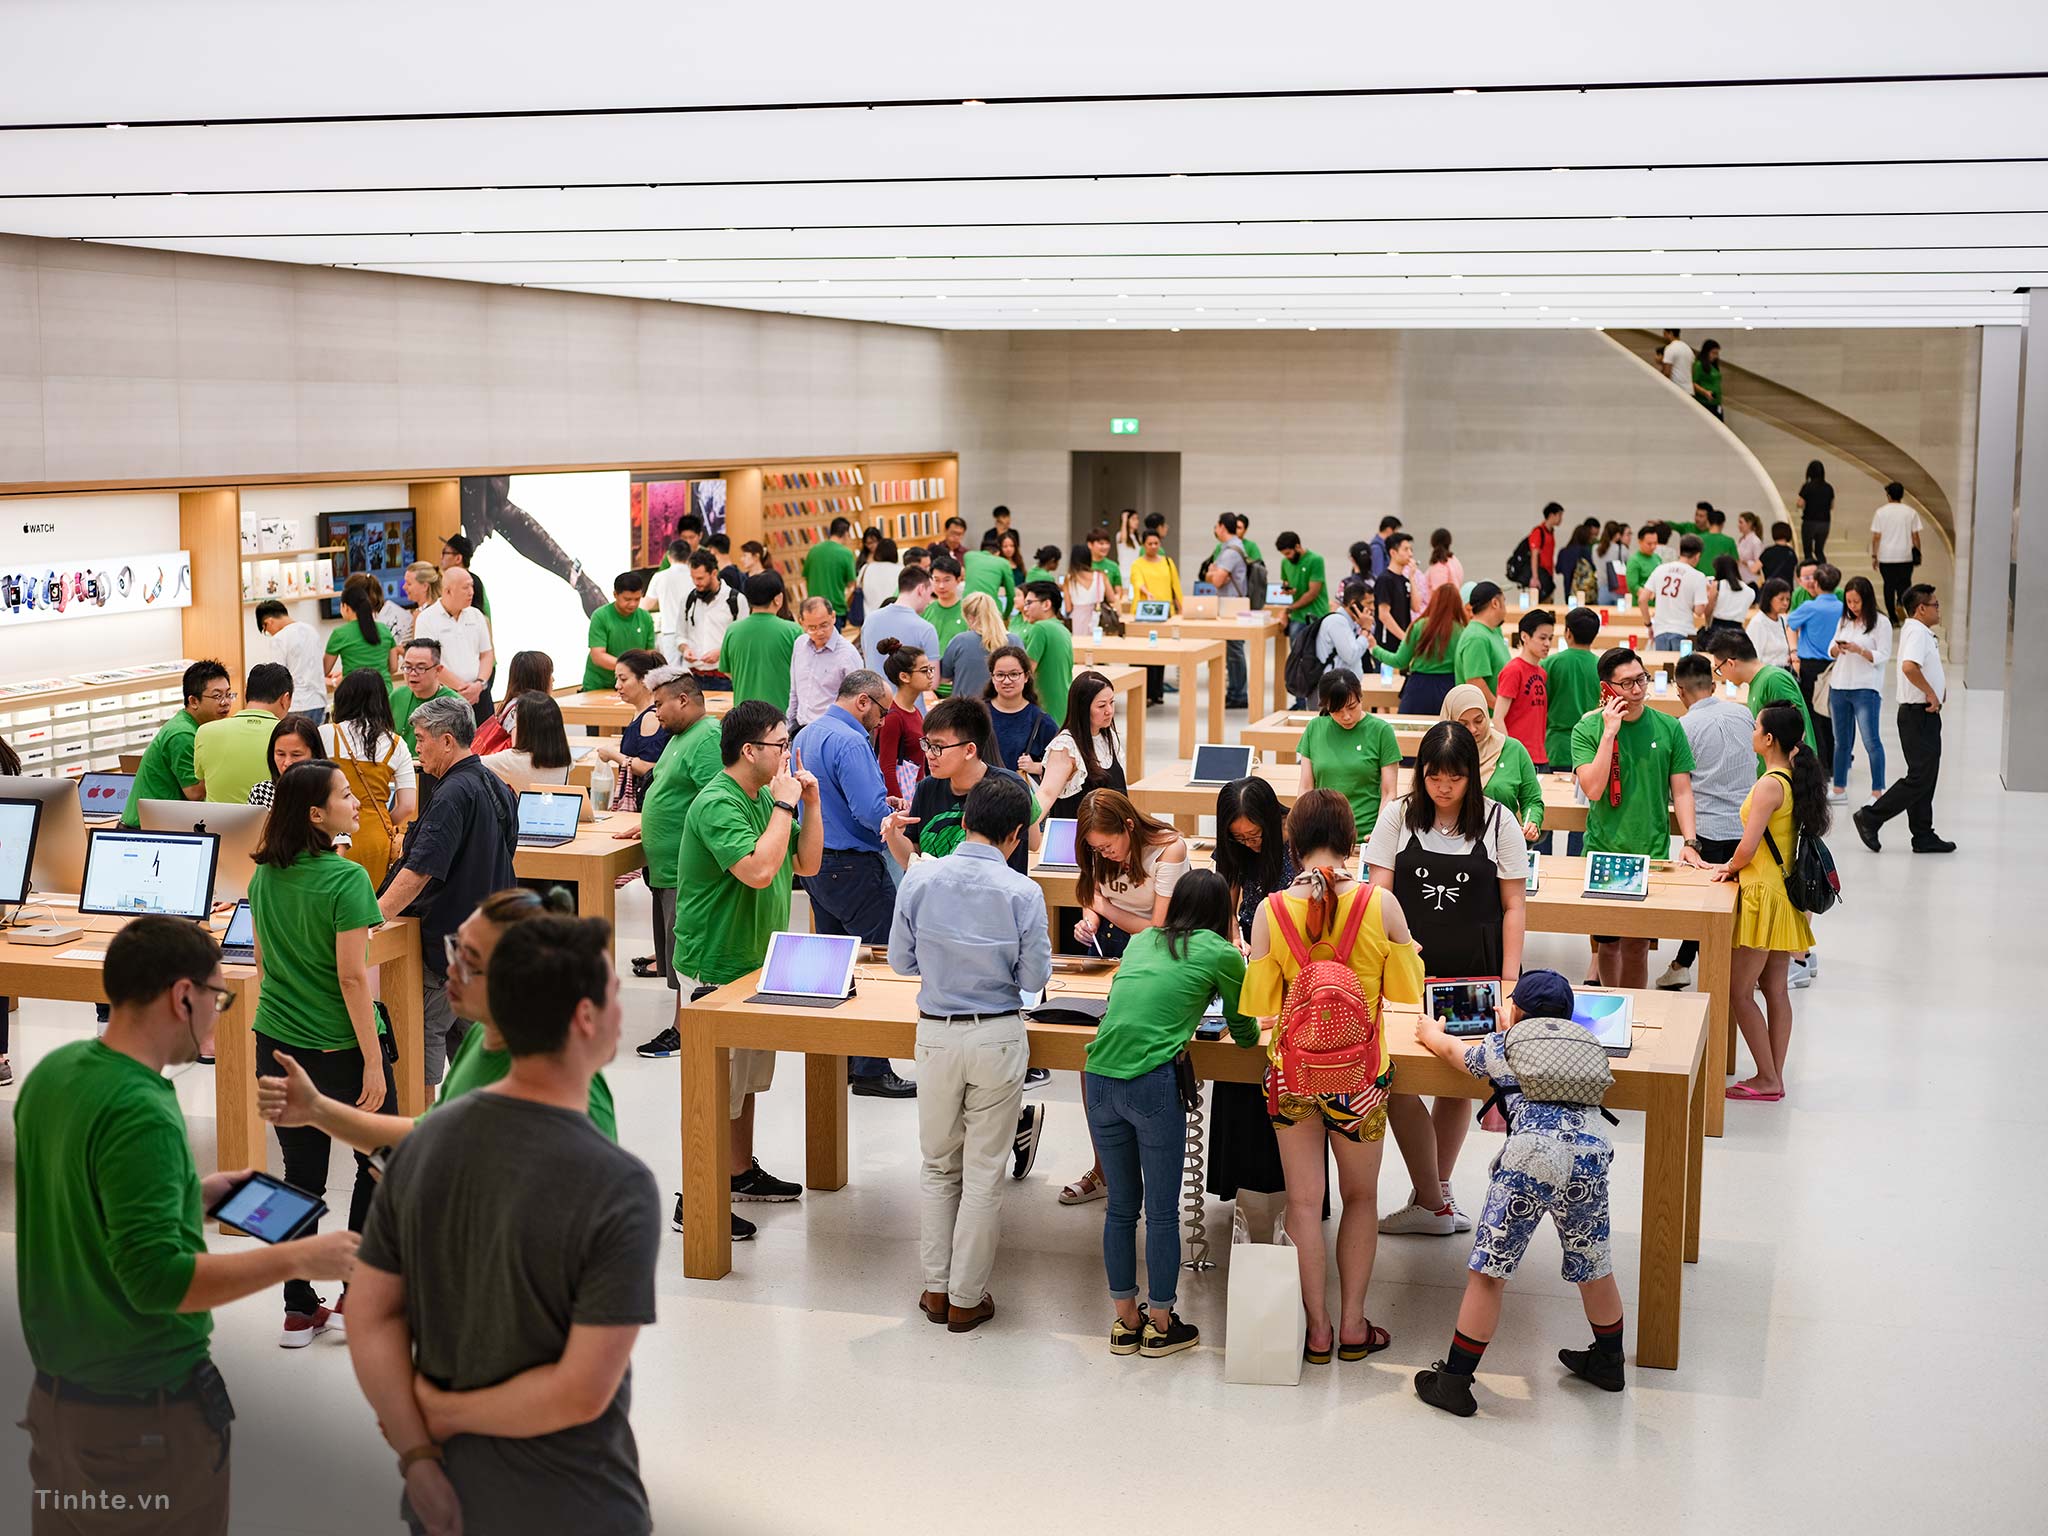 Apple-Store-Singapore-21.jpg